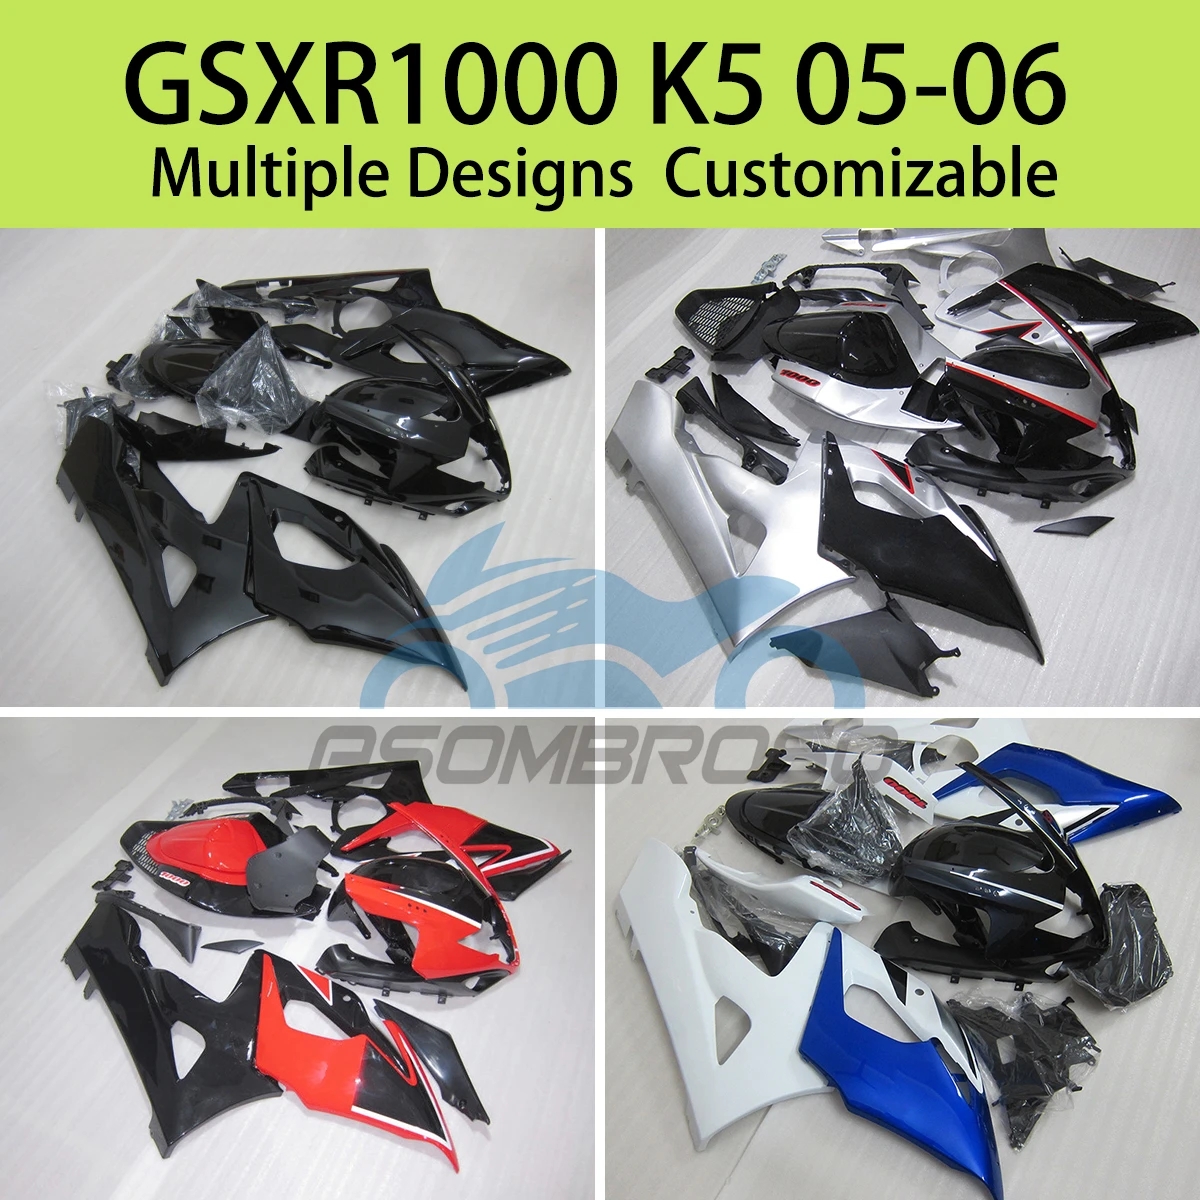 

Full Fairings for SUZUKI GSXR 1000 K5 05 06 Motorcycle Fairing Kit Injection Bodywork Set Complete Parts GSXR1000 2005 2006